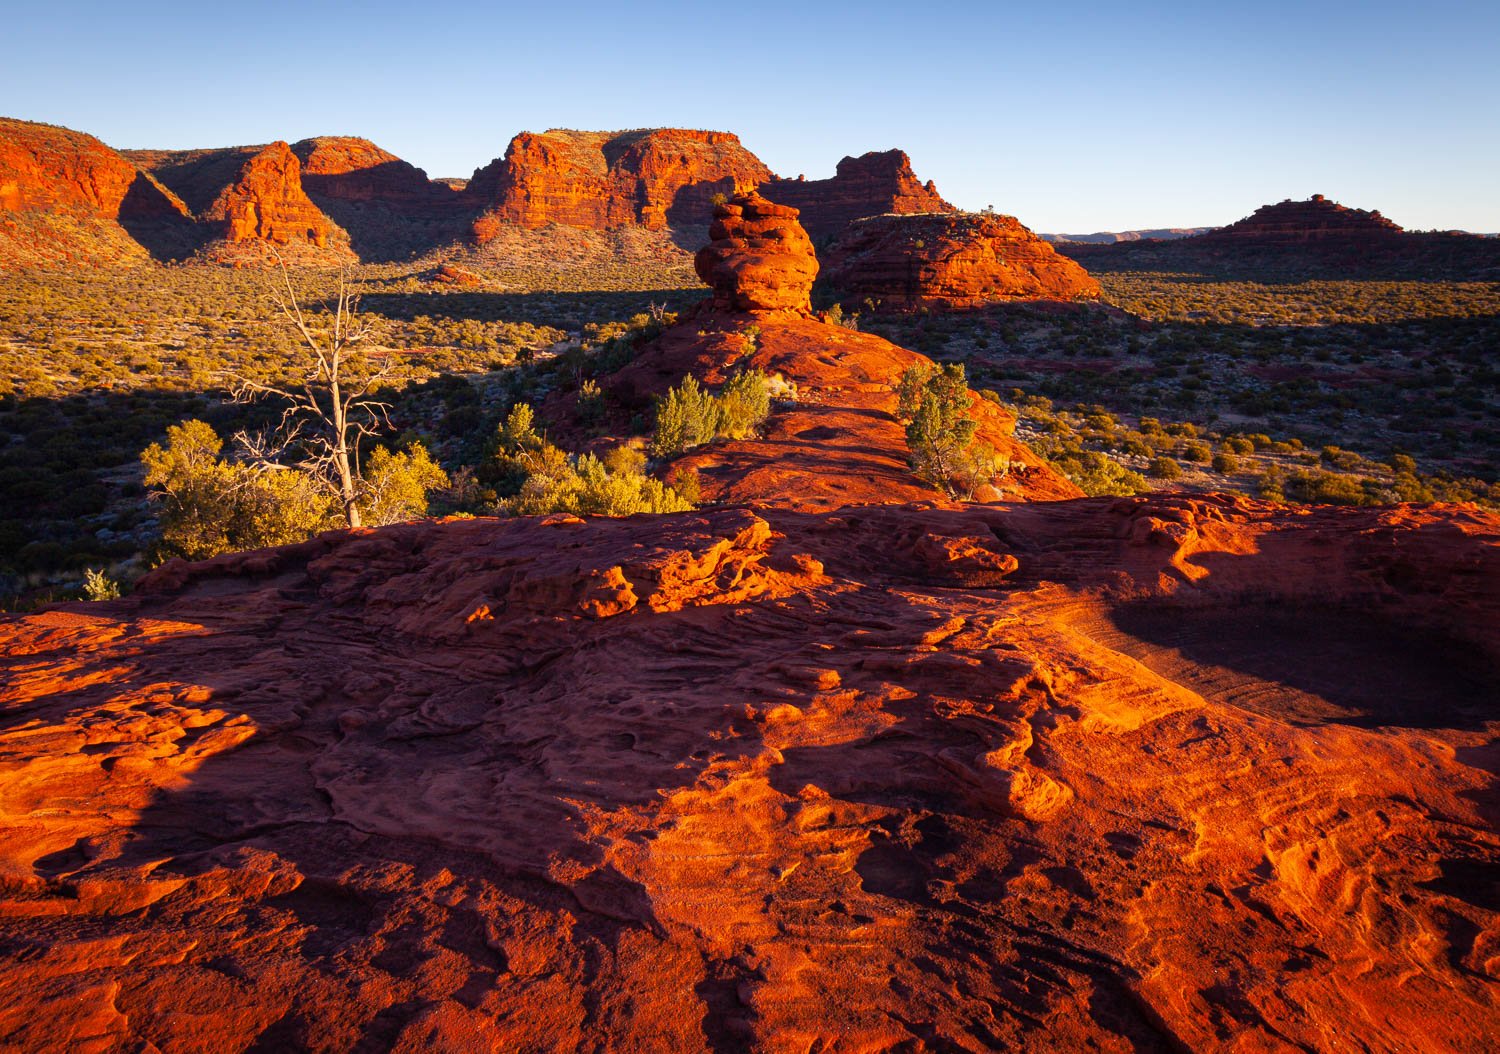 A long desert-like area with reddish mountain walls everywhere, Finke Gorge Sunset - Northern Territory